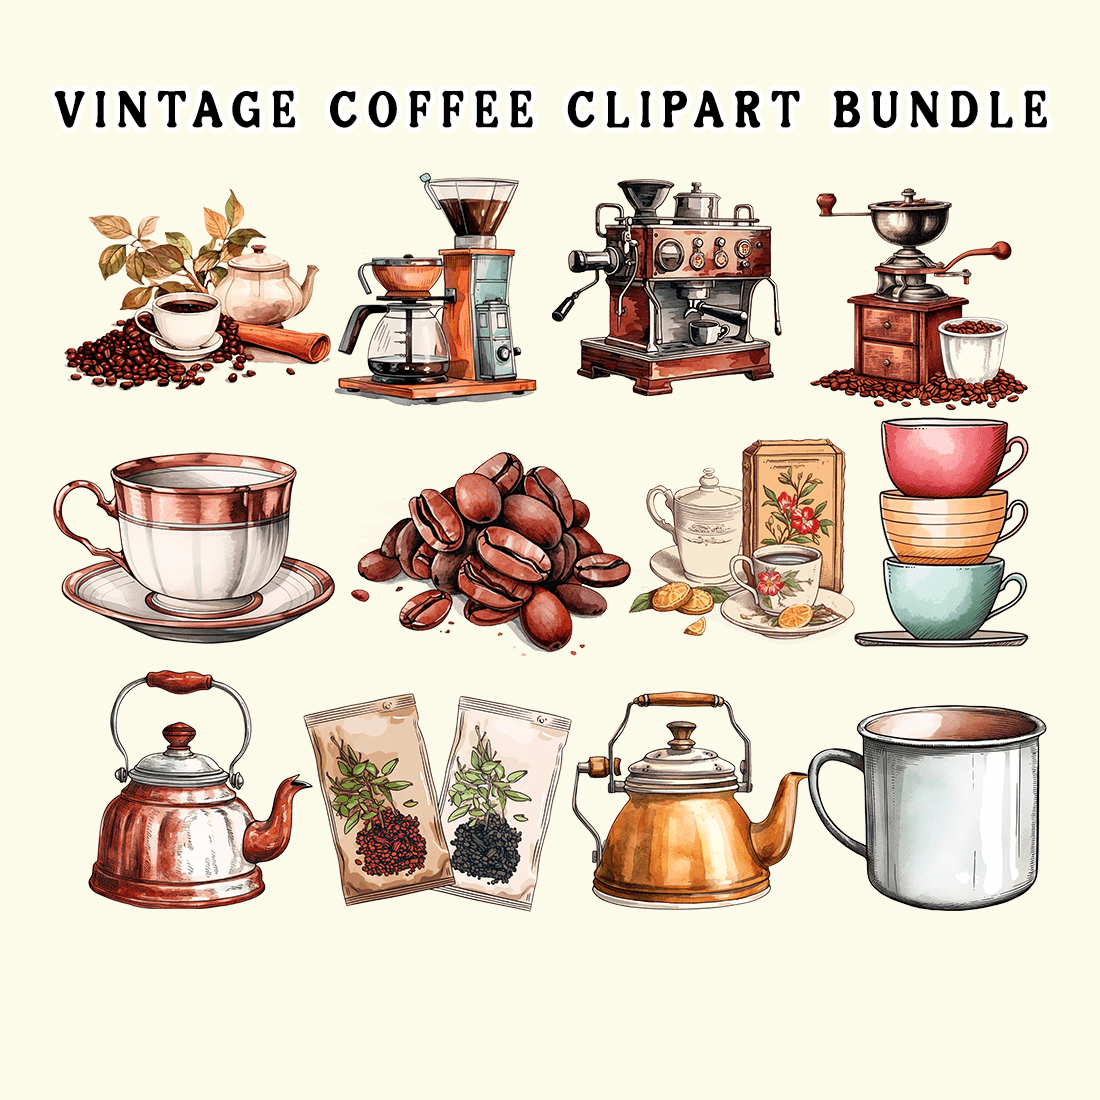 Vintage Coffee Clipart Bundle preview image.